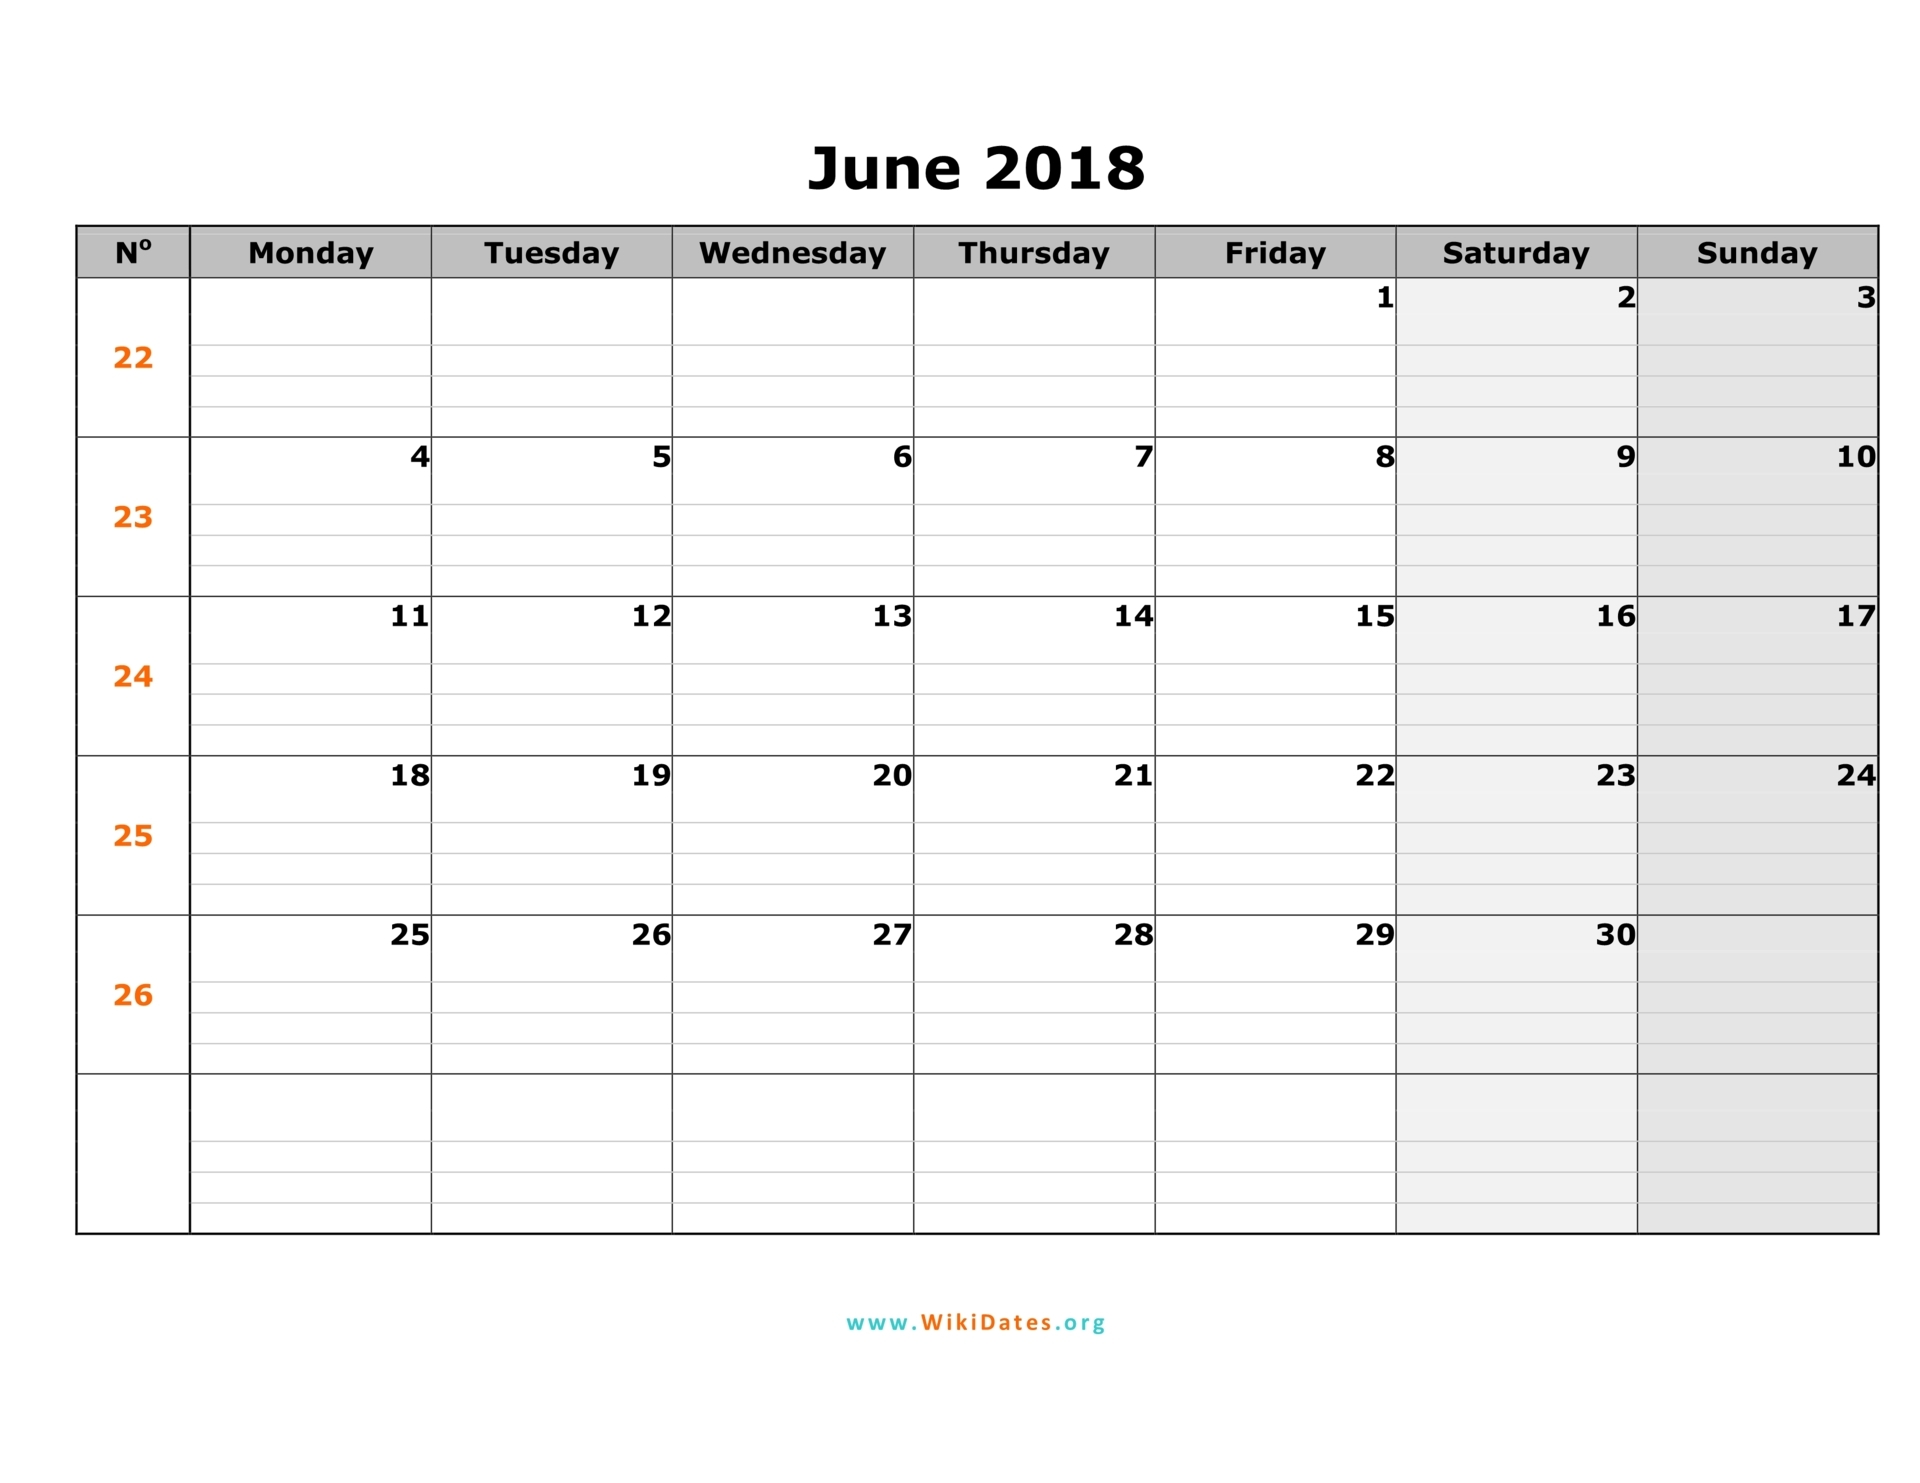 june-2018-calendar-wikidates